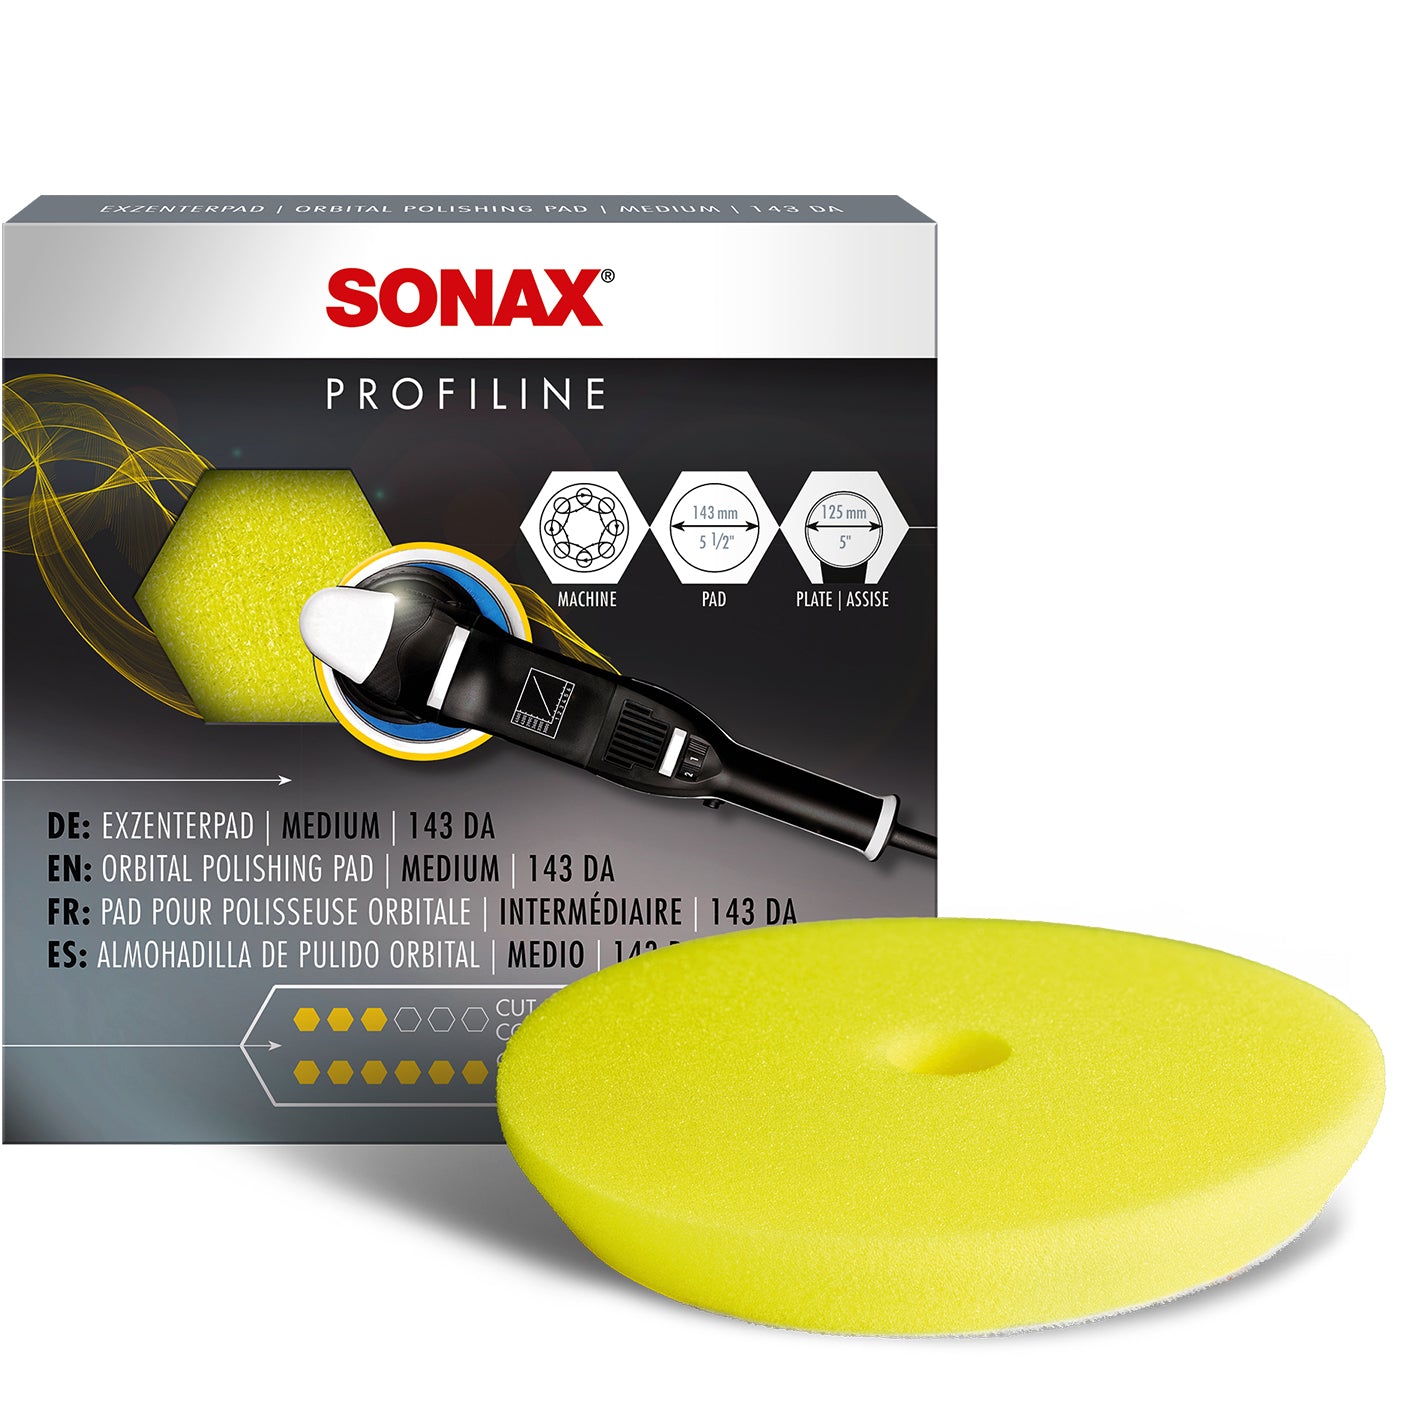 SONAX PROFILINE Foam Finishing Pad for DA 143mm